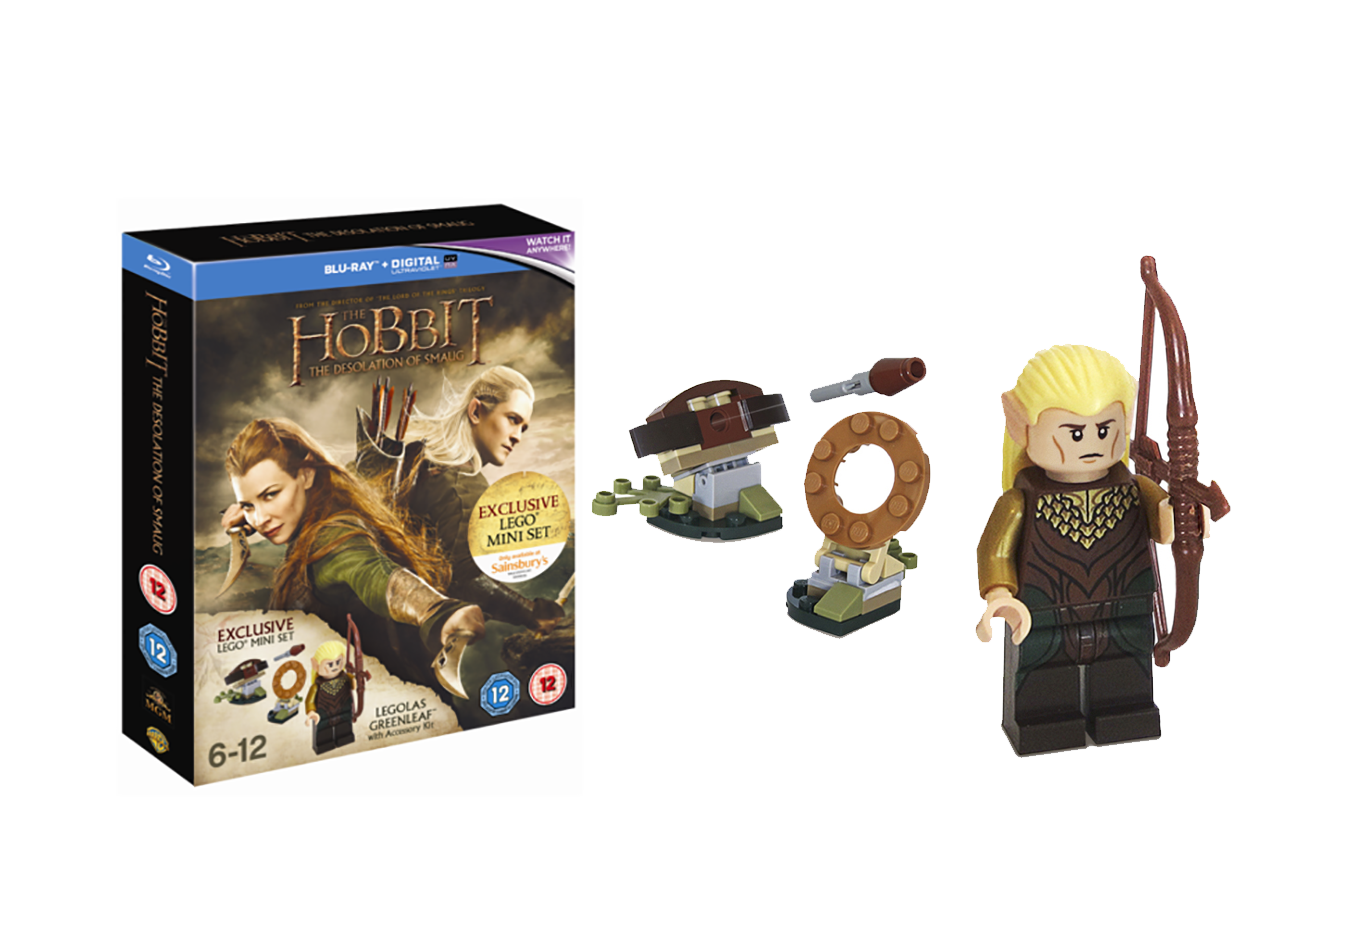 hobbit desolation of smaug blu ray set comes with free hobbit lego image 1